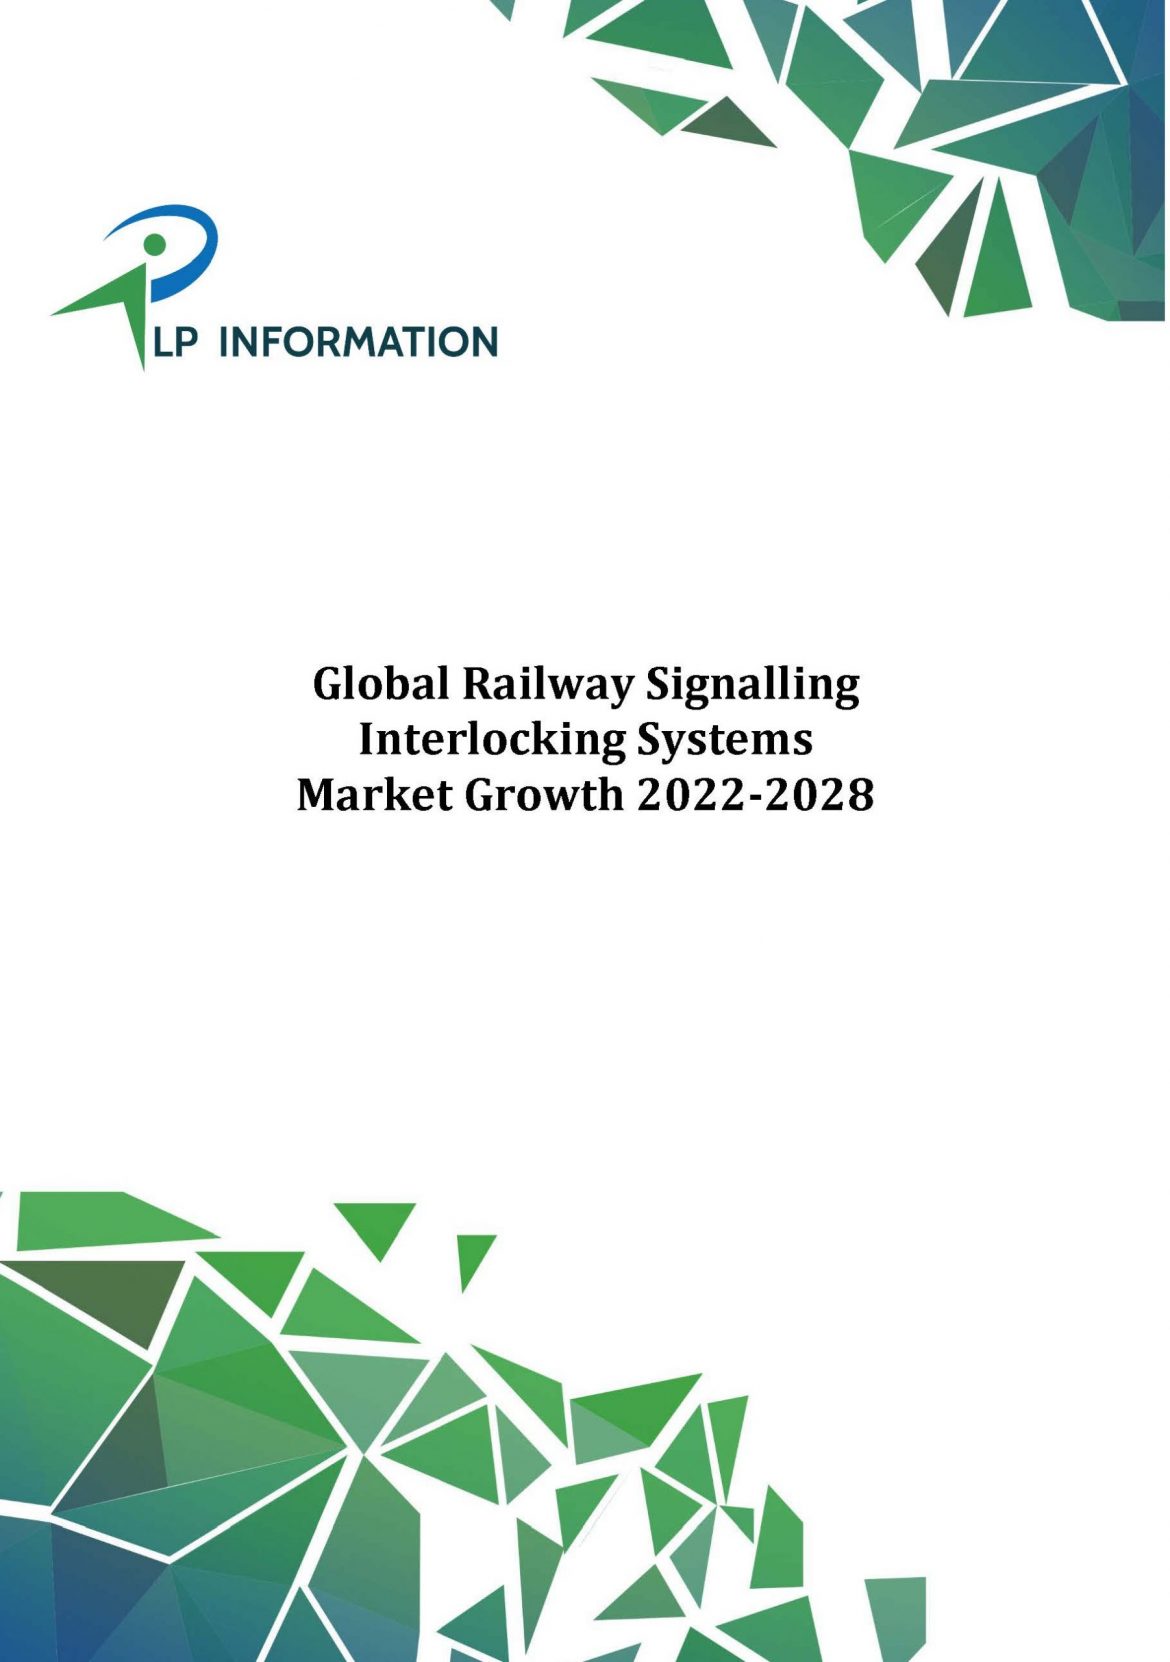 Global Railway Signalling Interlocking Systems Market Growth 2022-2028